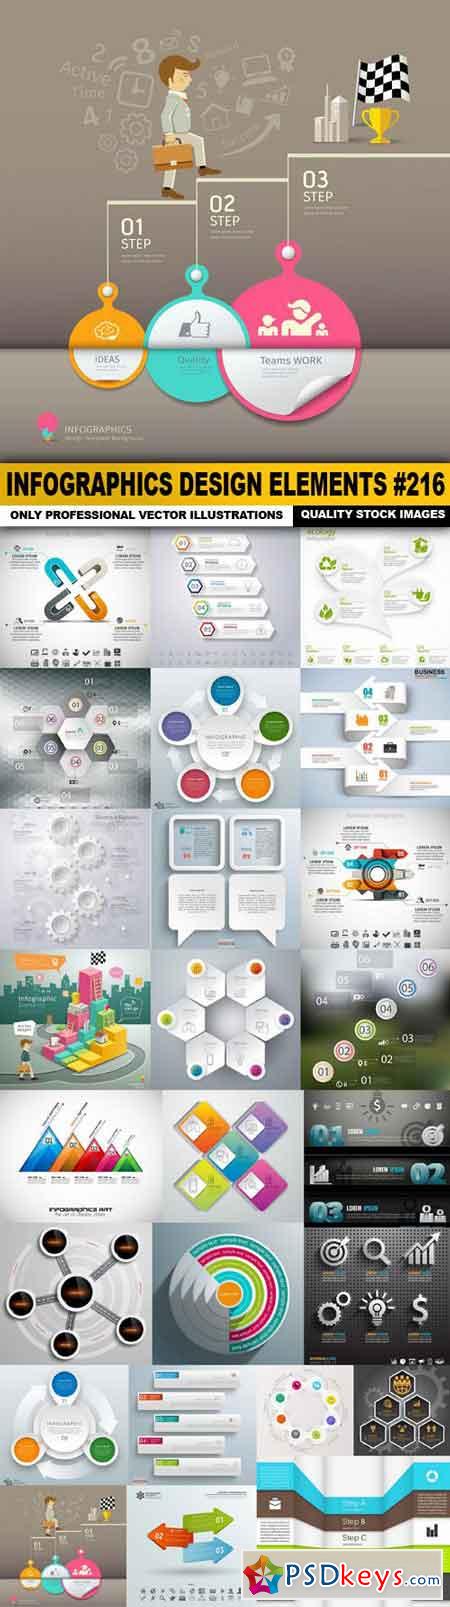 Infographics Design Elements #216 - 25 Vector